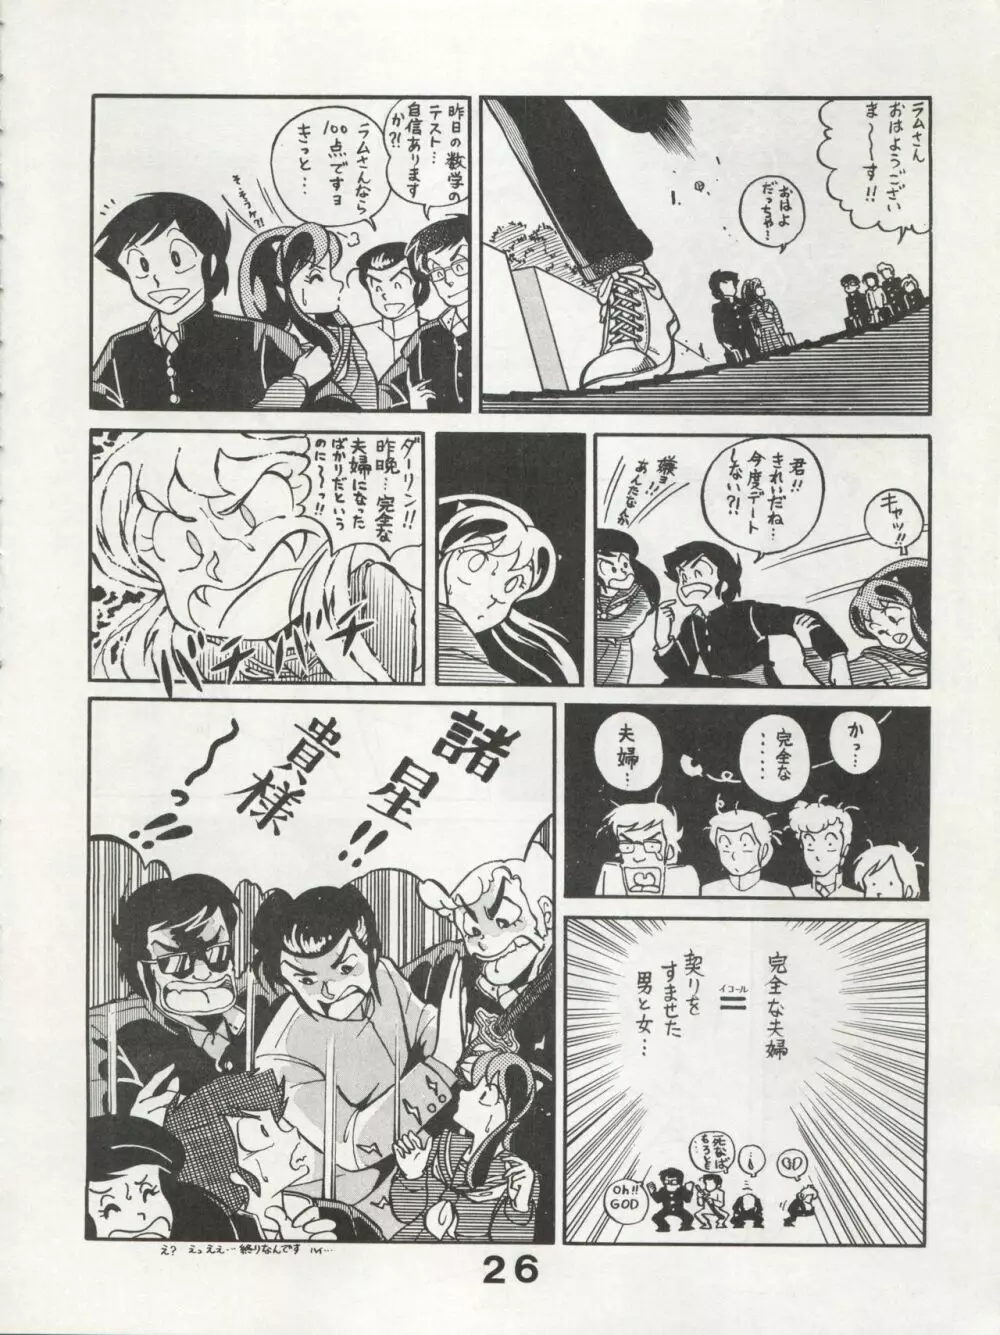 MoN MoN もんモン Vol.5 - page26